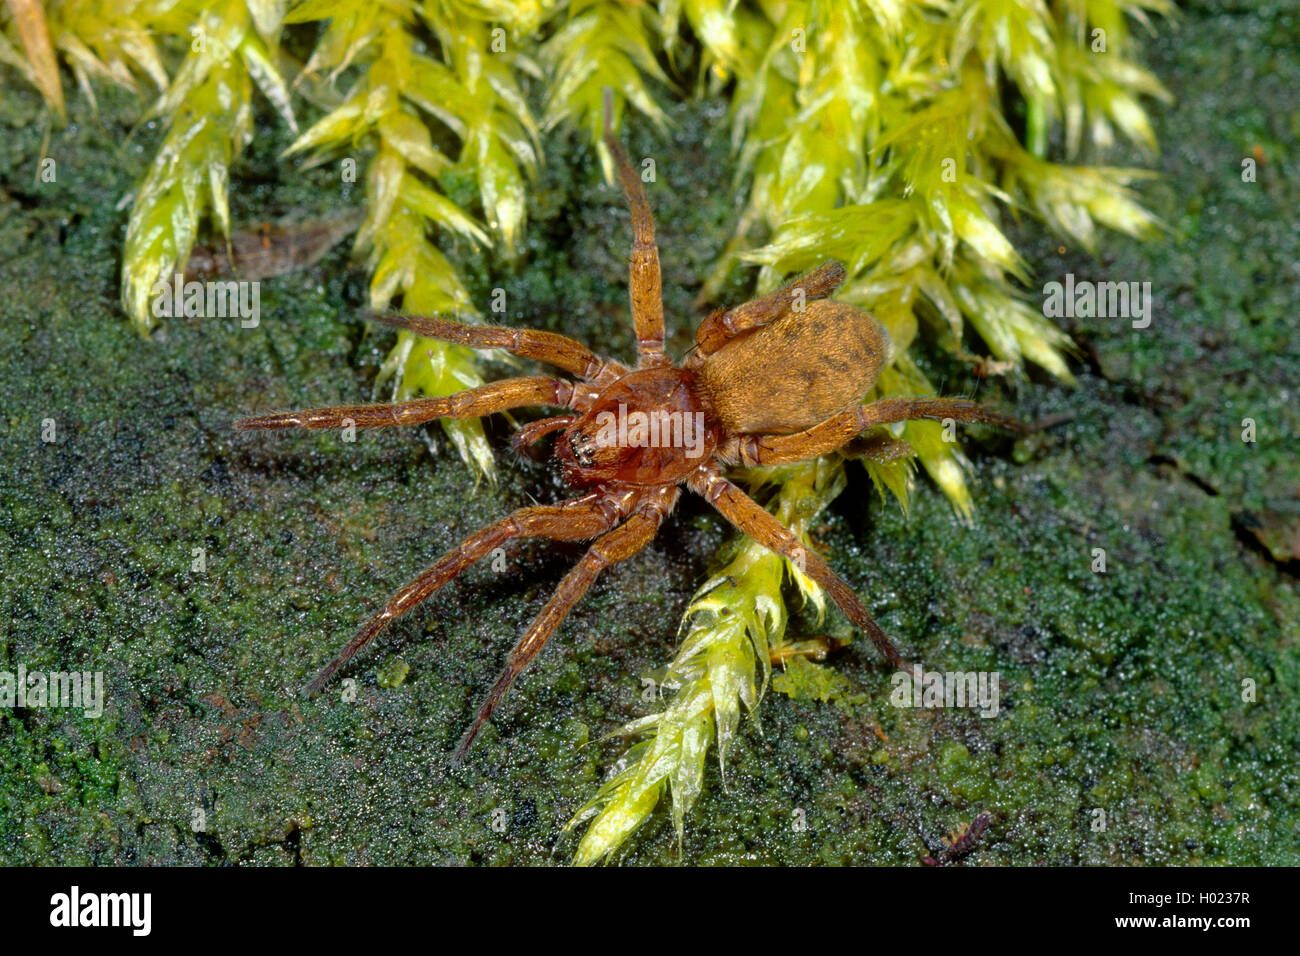 Liocranid sac spiders (Agroeca brunnea), on the ground, Germany Stock Photo